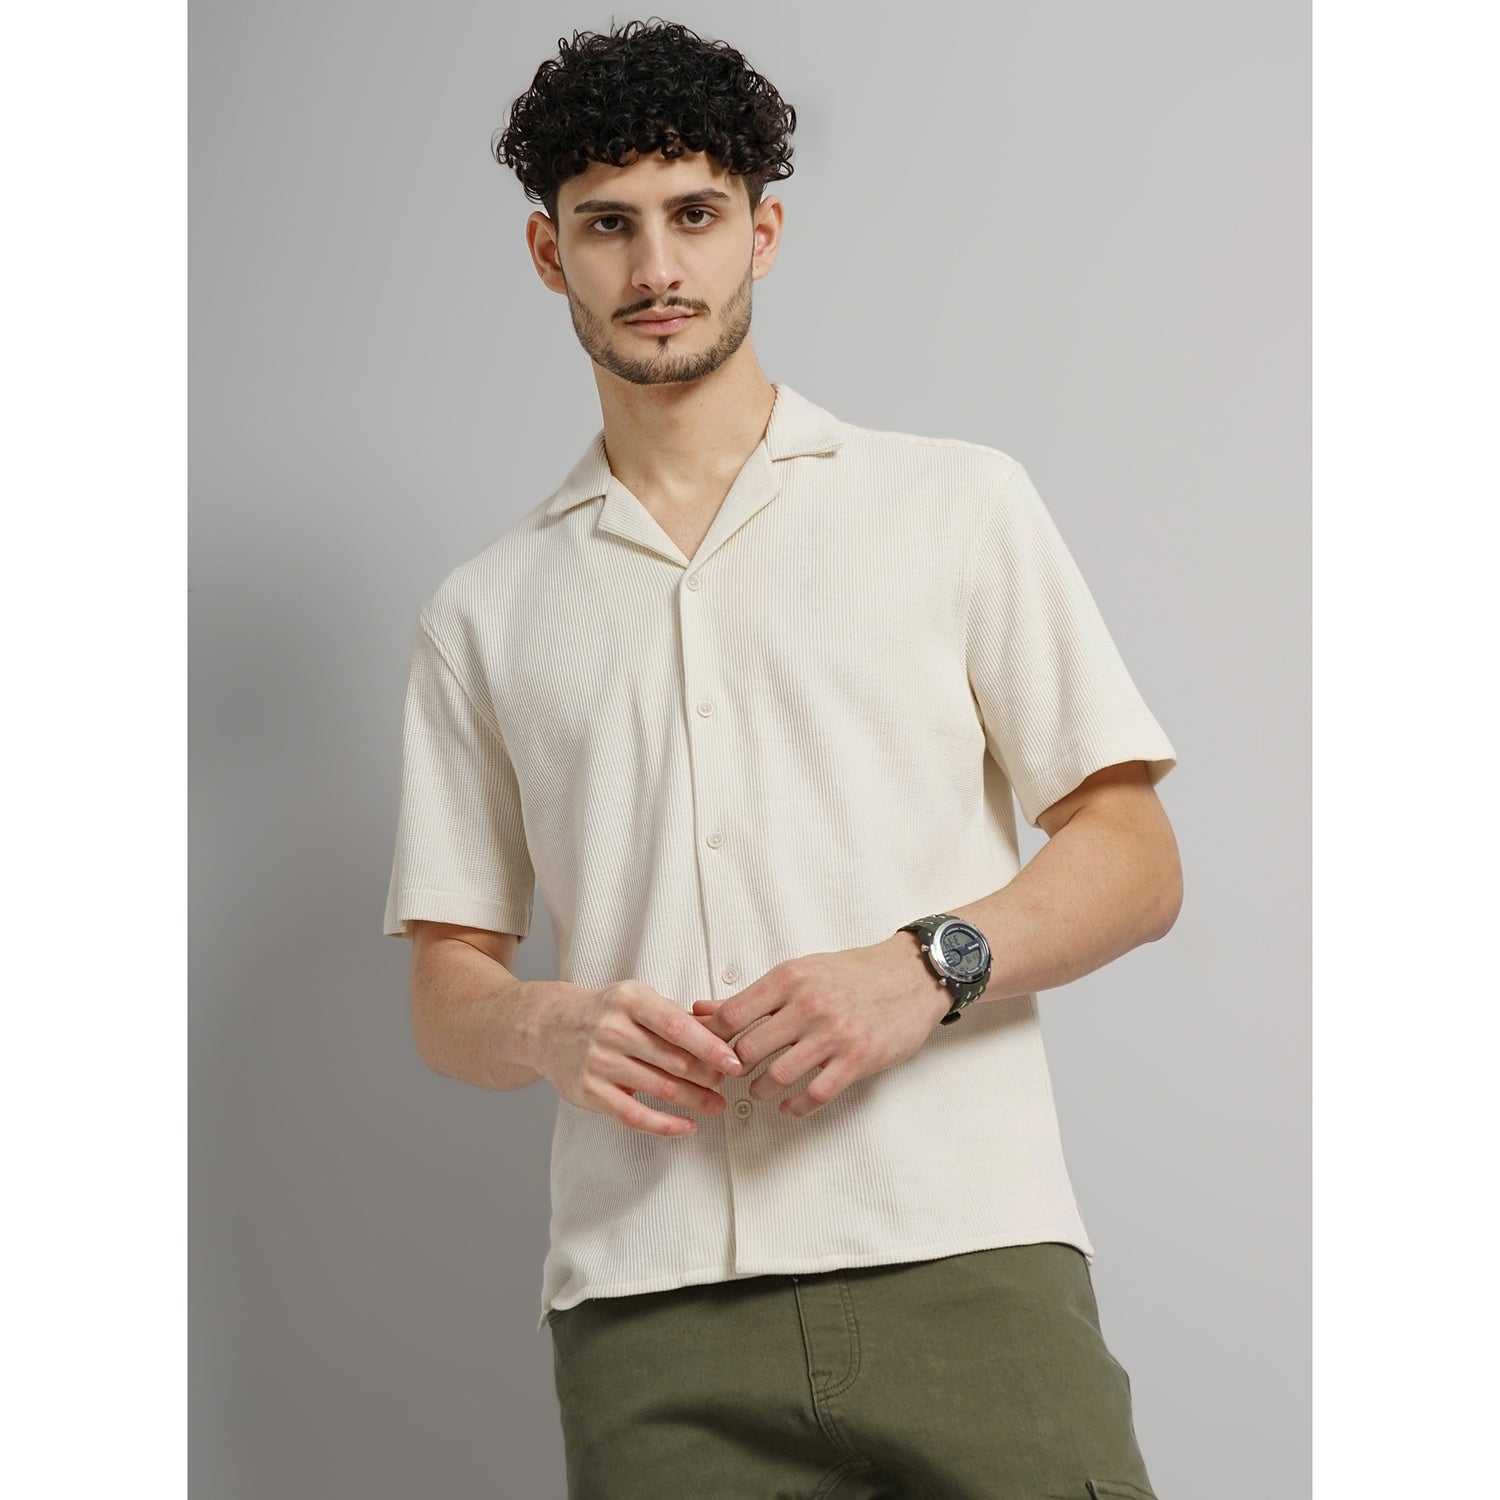 Men Beige Solid Regular Fit Cotton Flat Knit Casual Shirt (GABAKNIT)